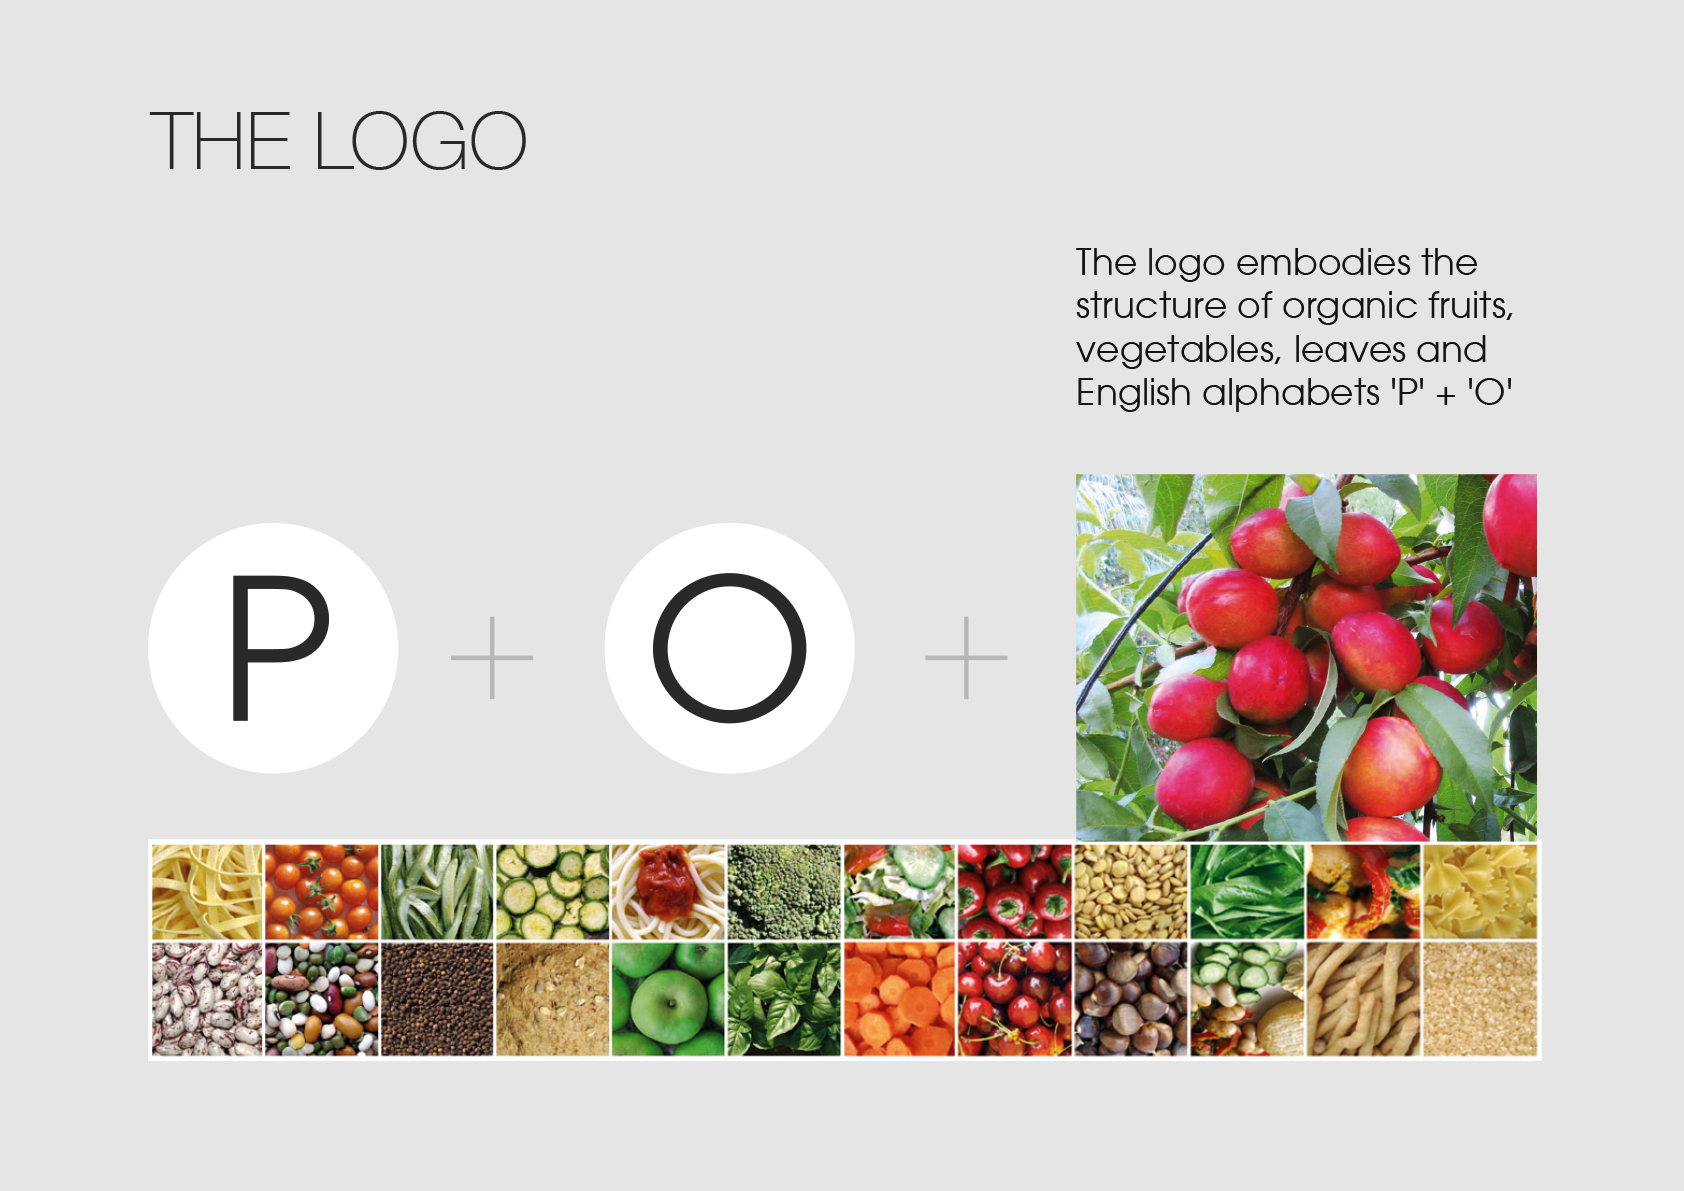 Pragati Organics Logo